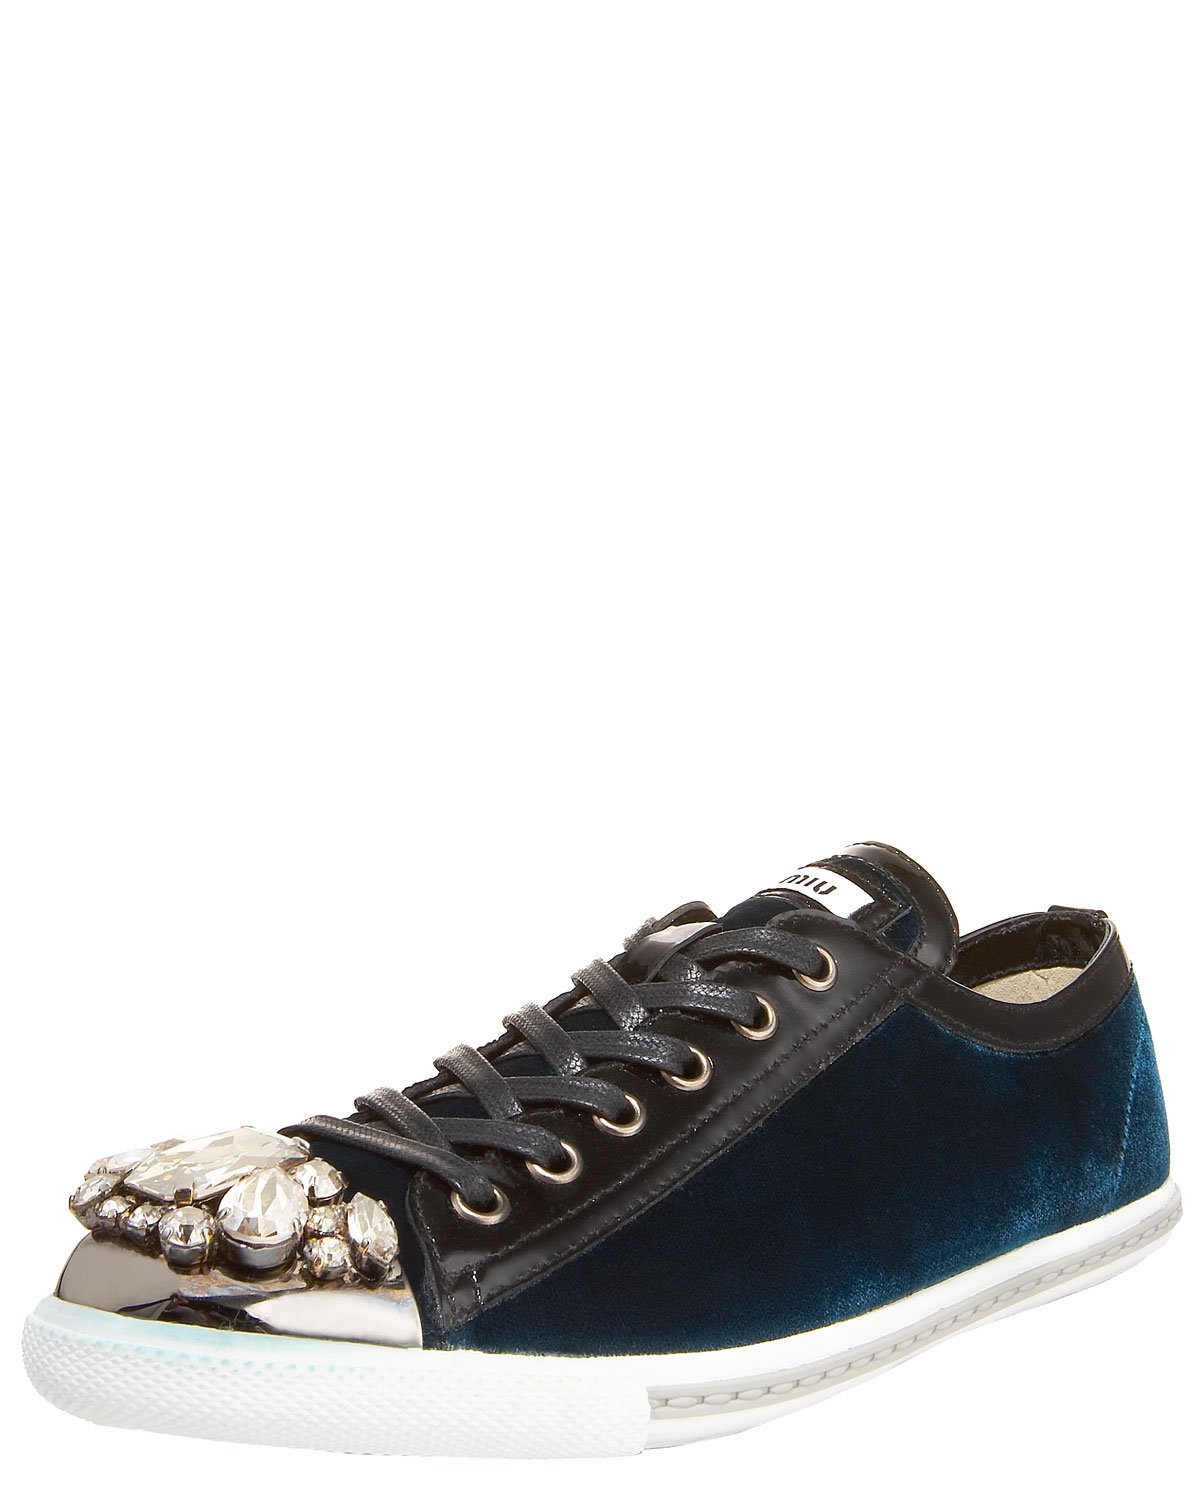 Miu Miu Jewel-toe Velvet Sneaker in Blue (Black) - Lyst